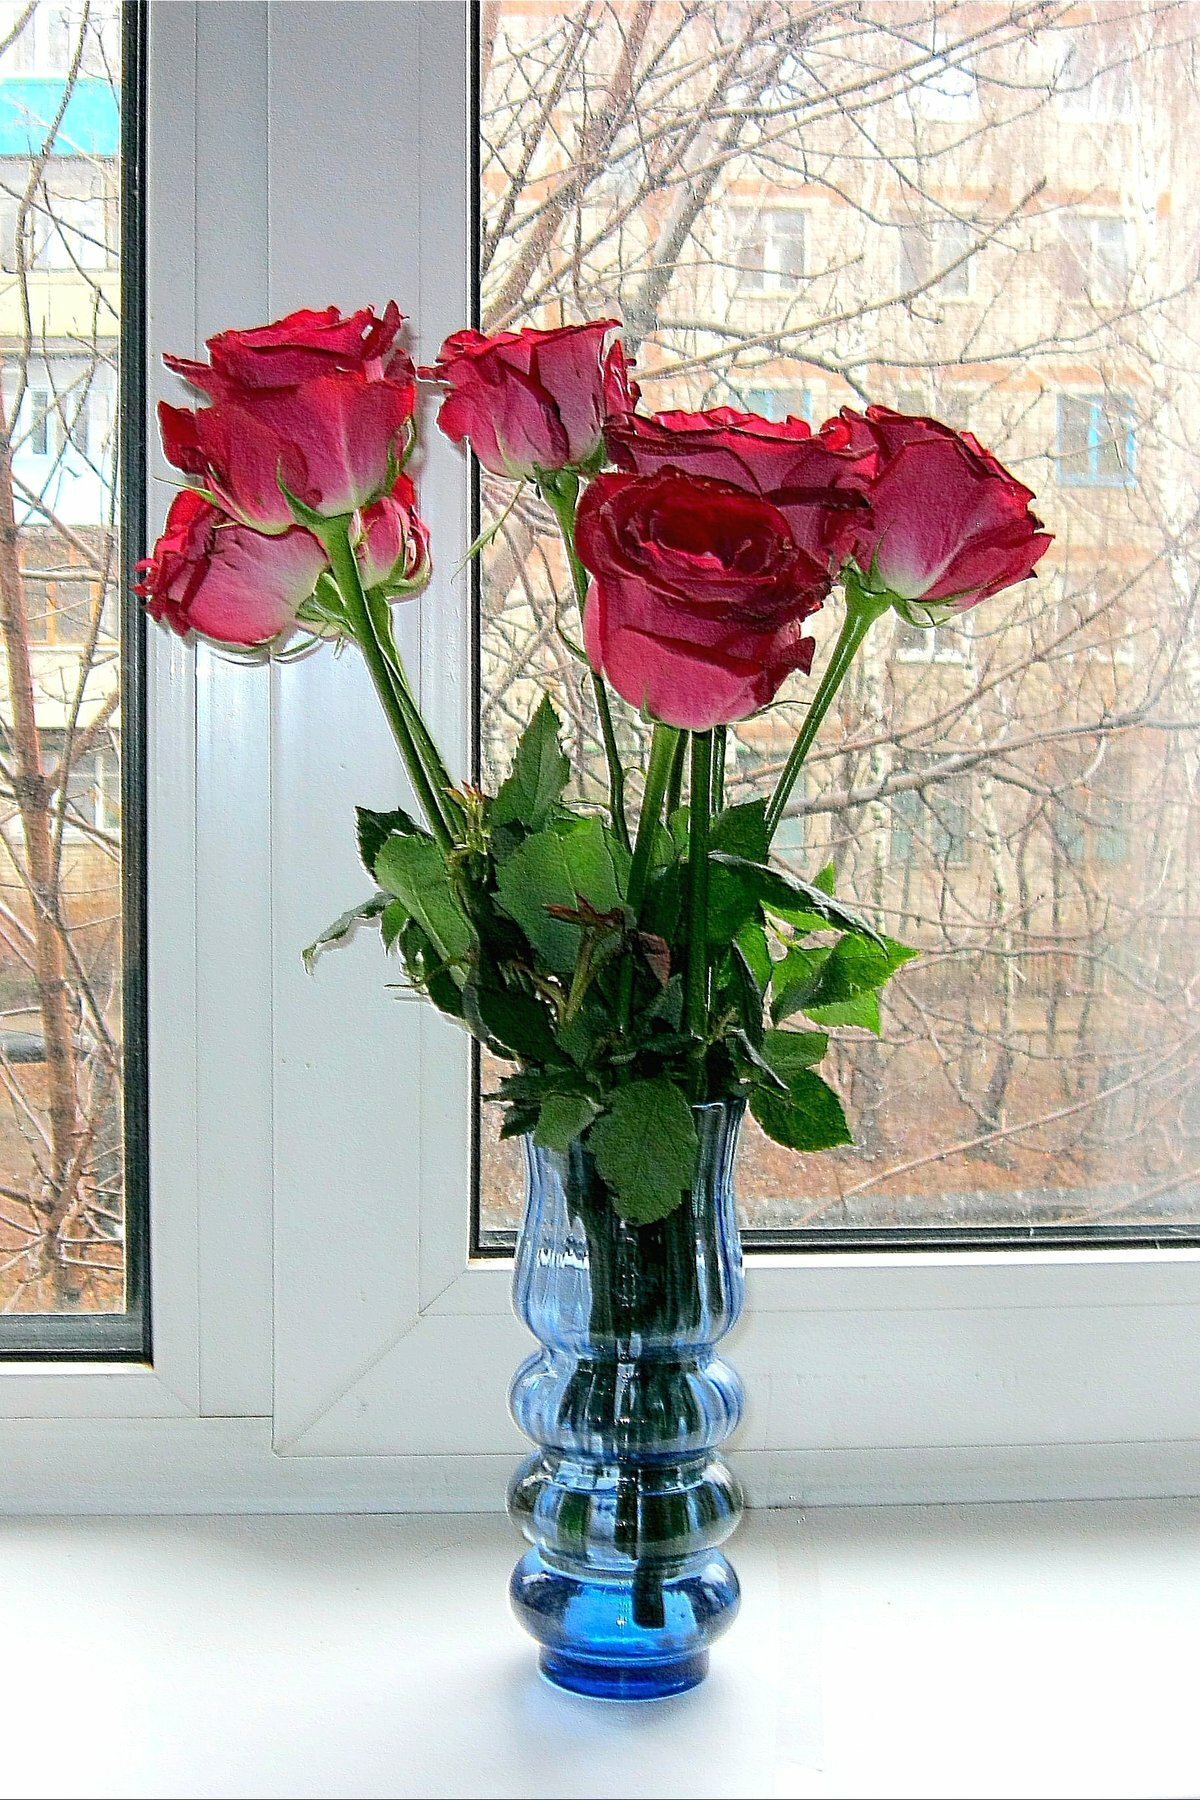 Условия для роз в вазе. Цветы на окне. Цветы в вазе. Цветц в впзн. Цветы в вазе на окне.